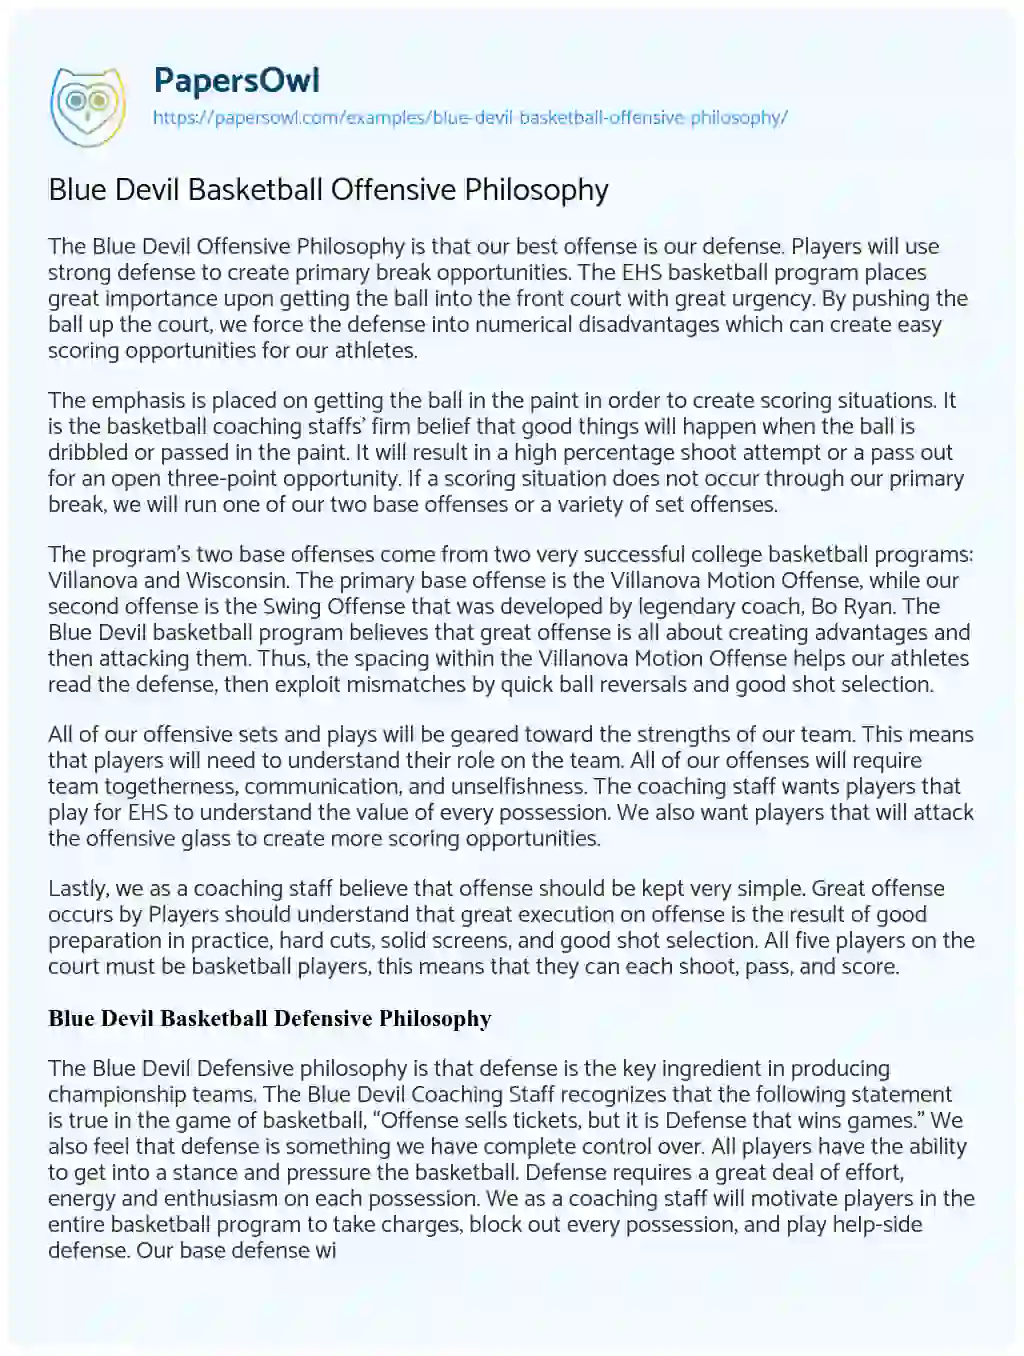 Essay on Blue Devil Basketball Offensive Philosophy